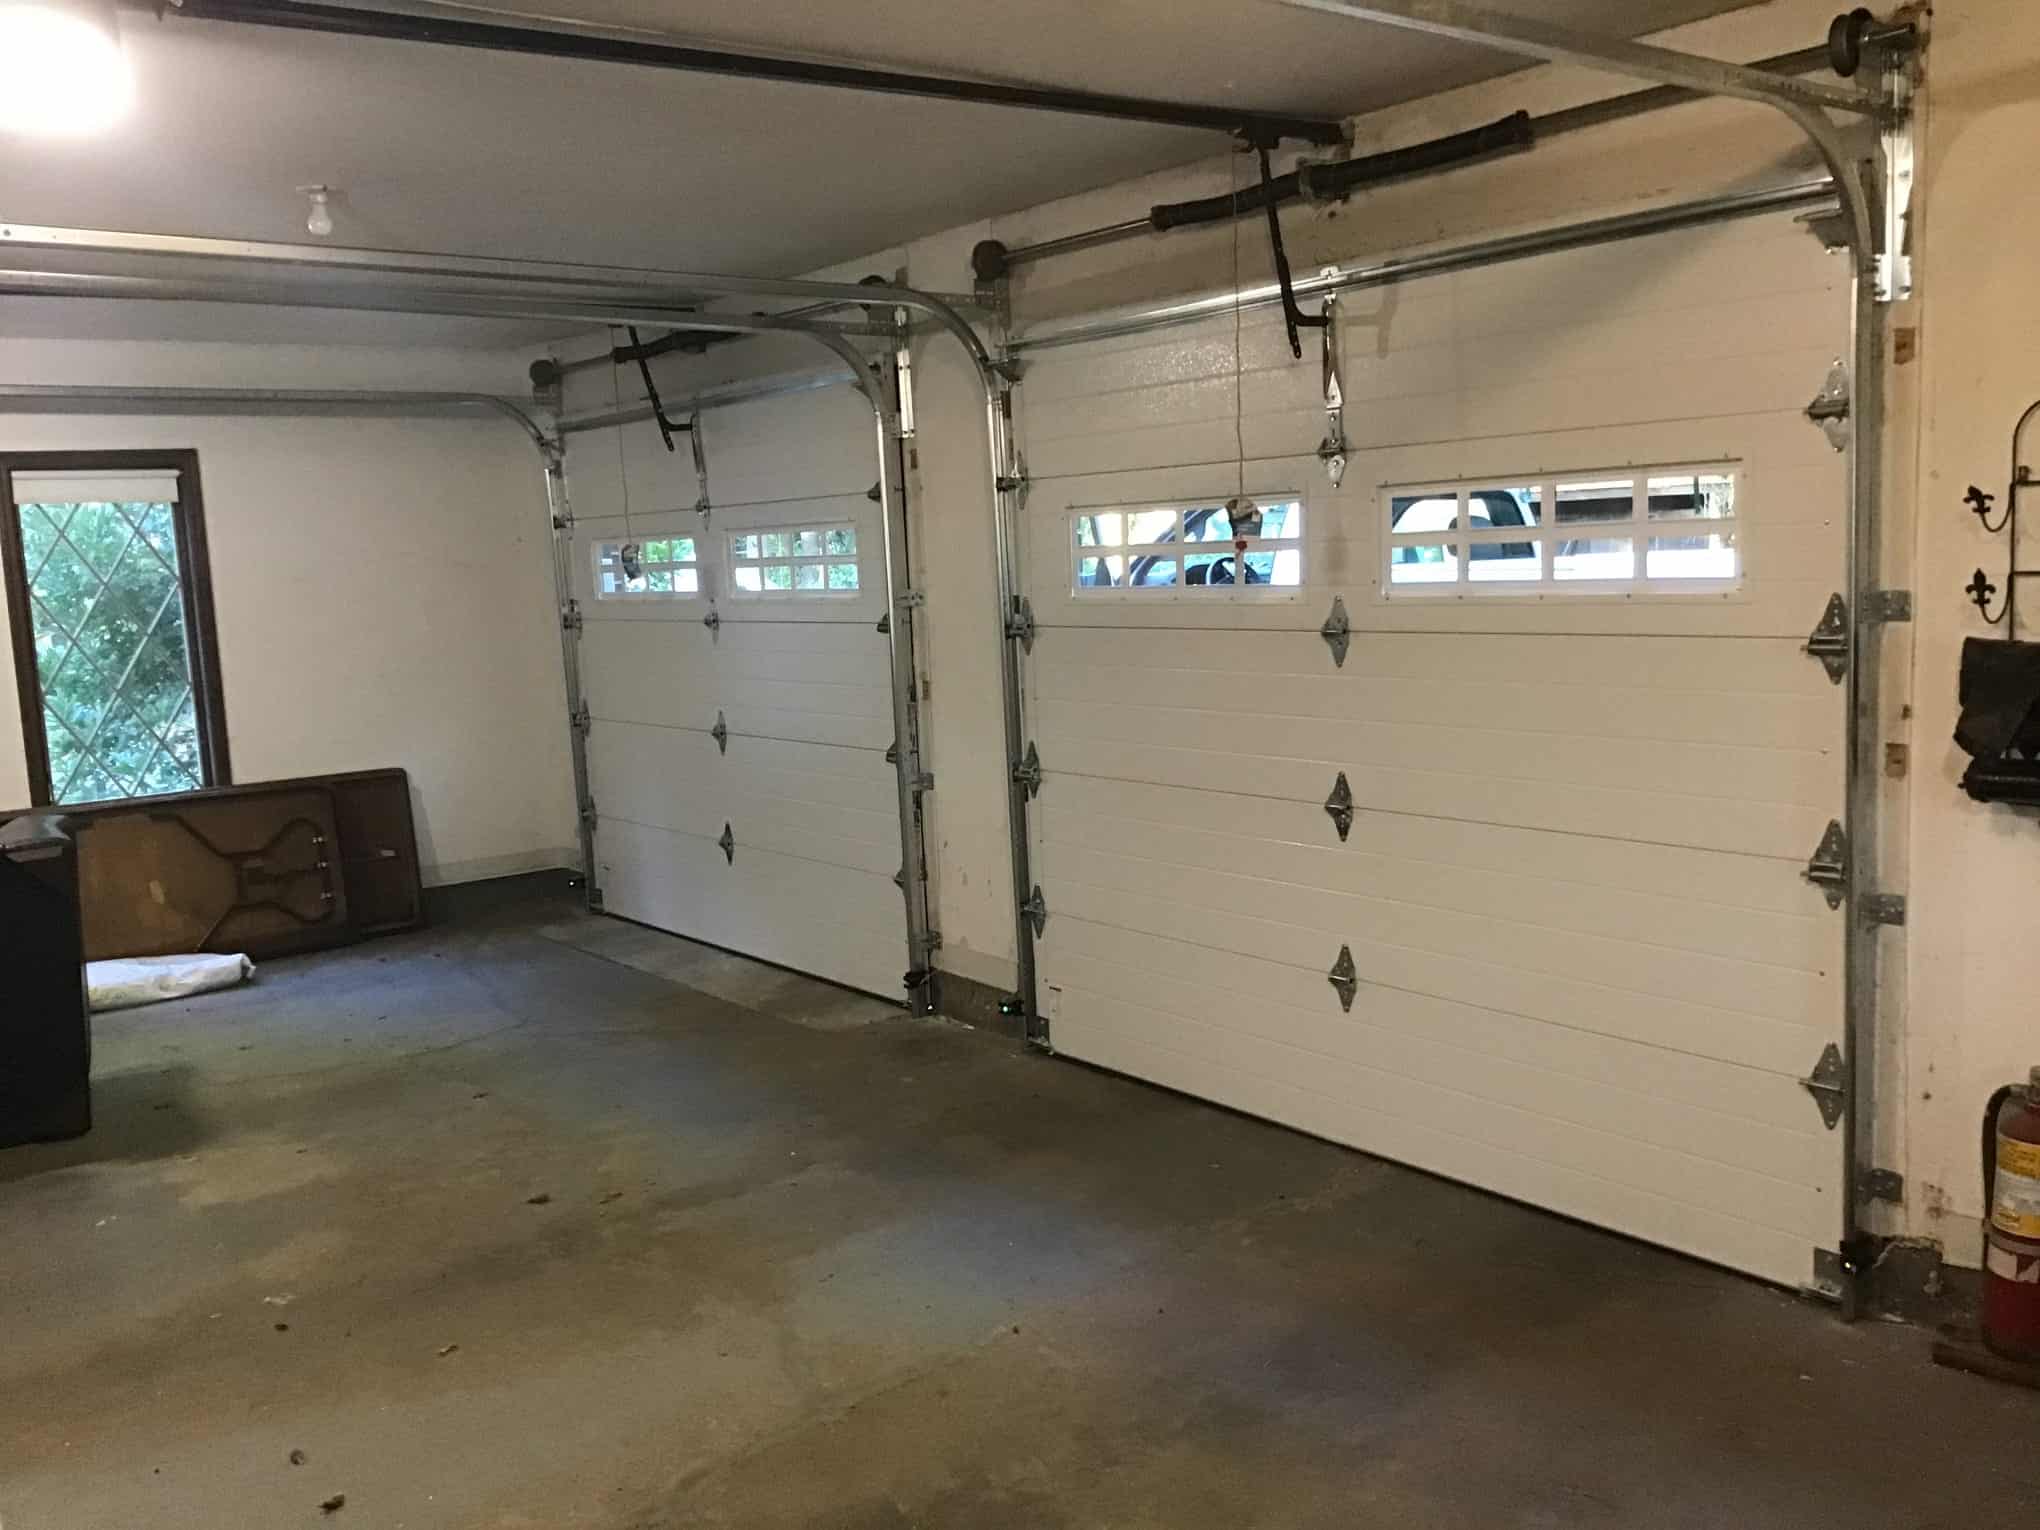 Garage door maintenance in Lake County, Illinois